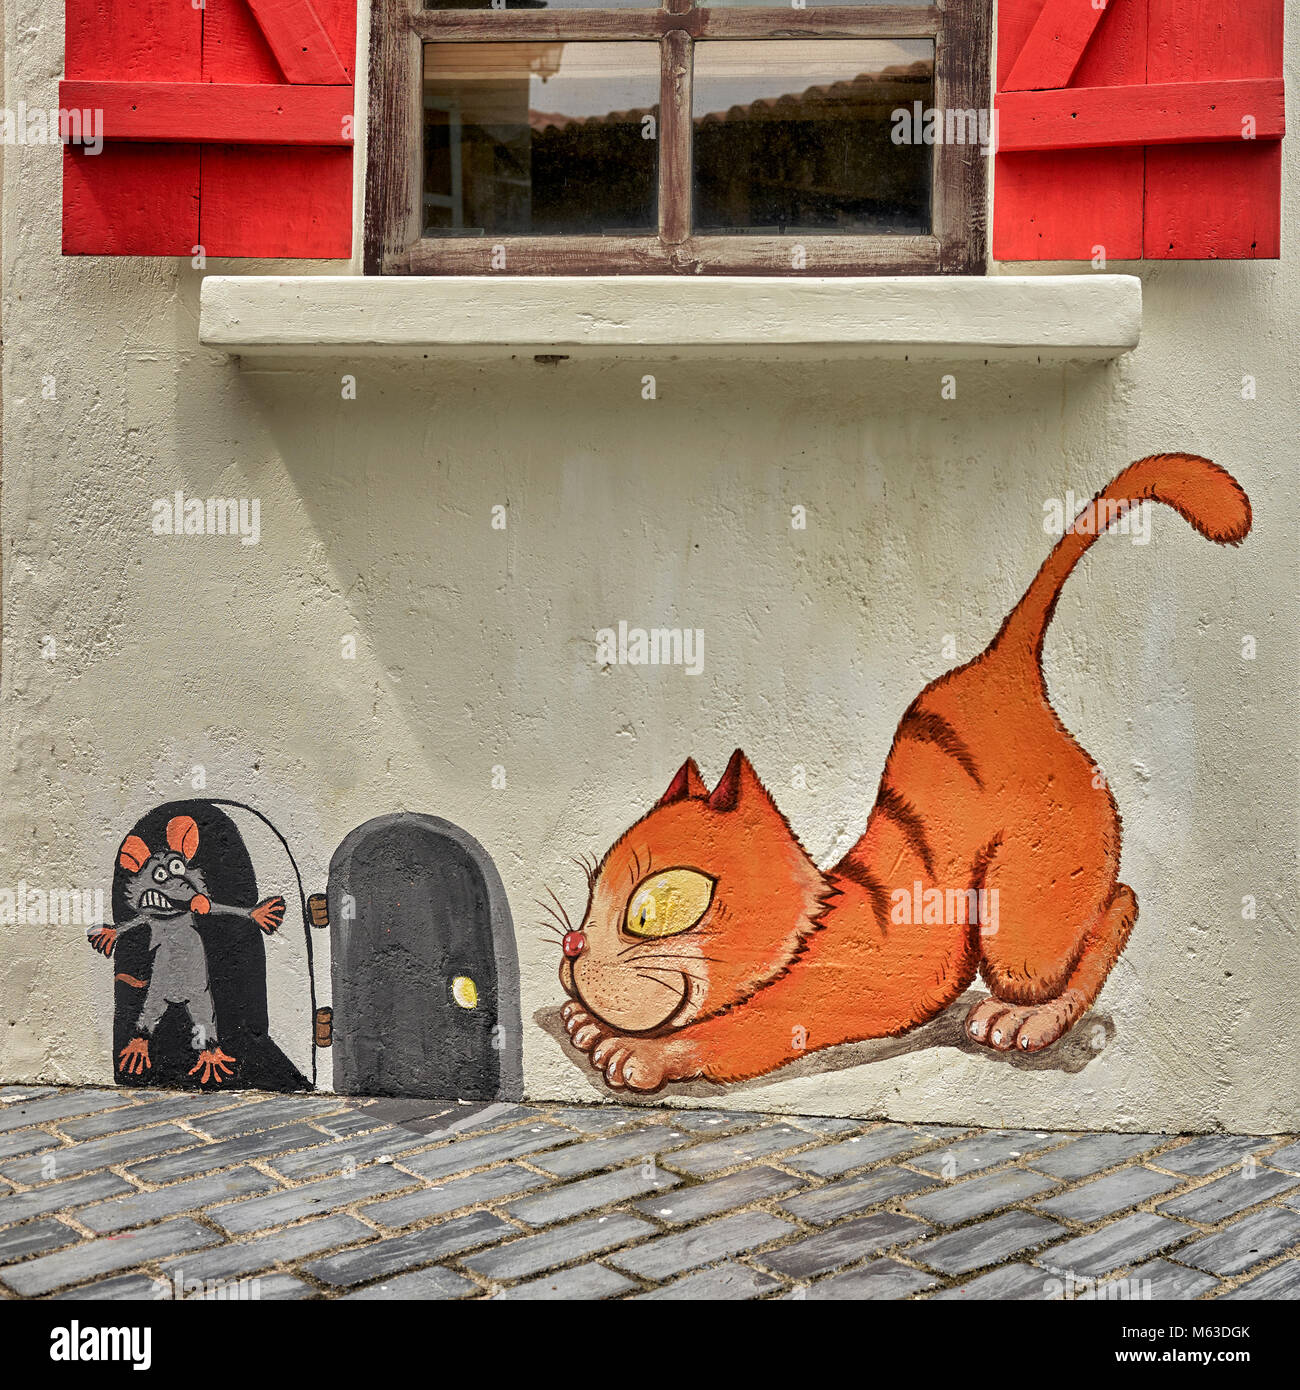 Tom and Jerry graffiti and wall art Stock Photo